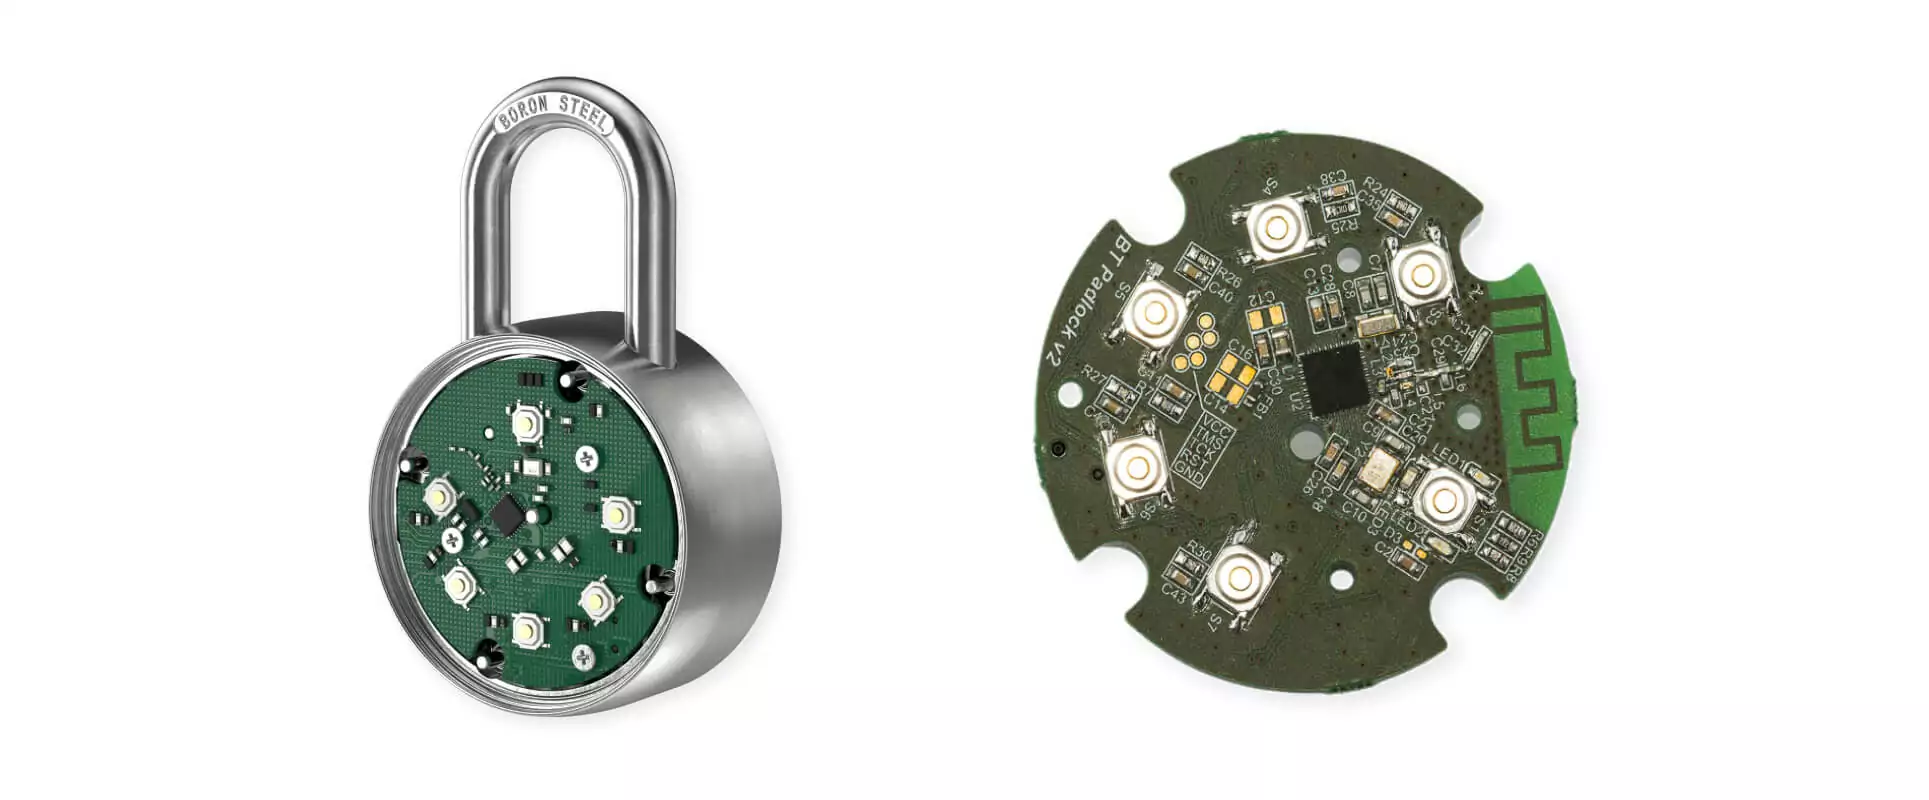 Bluetooth Smart Lock Hardware design